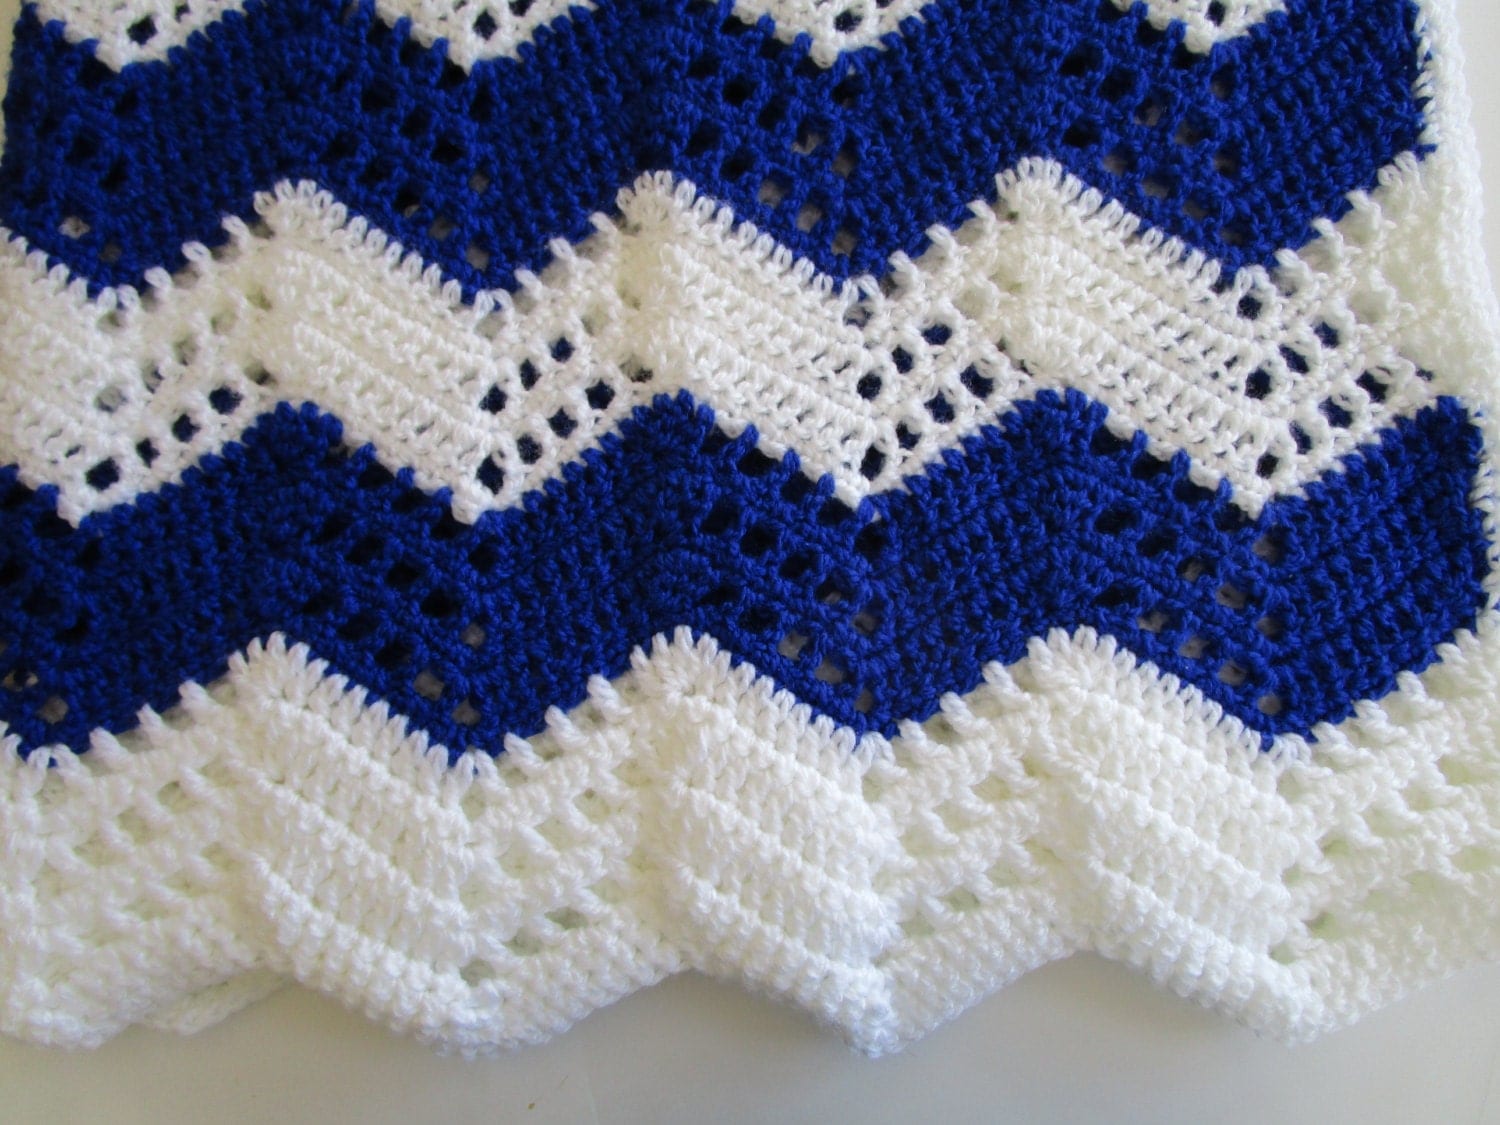 crochet afghan patterns free pdf